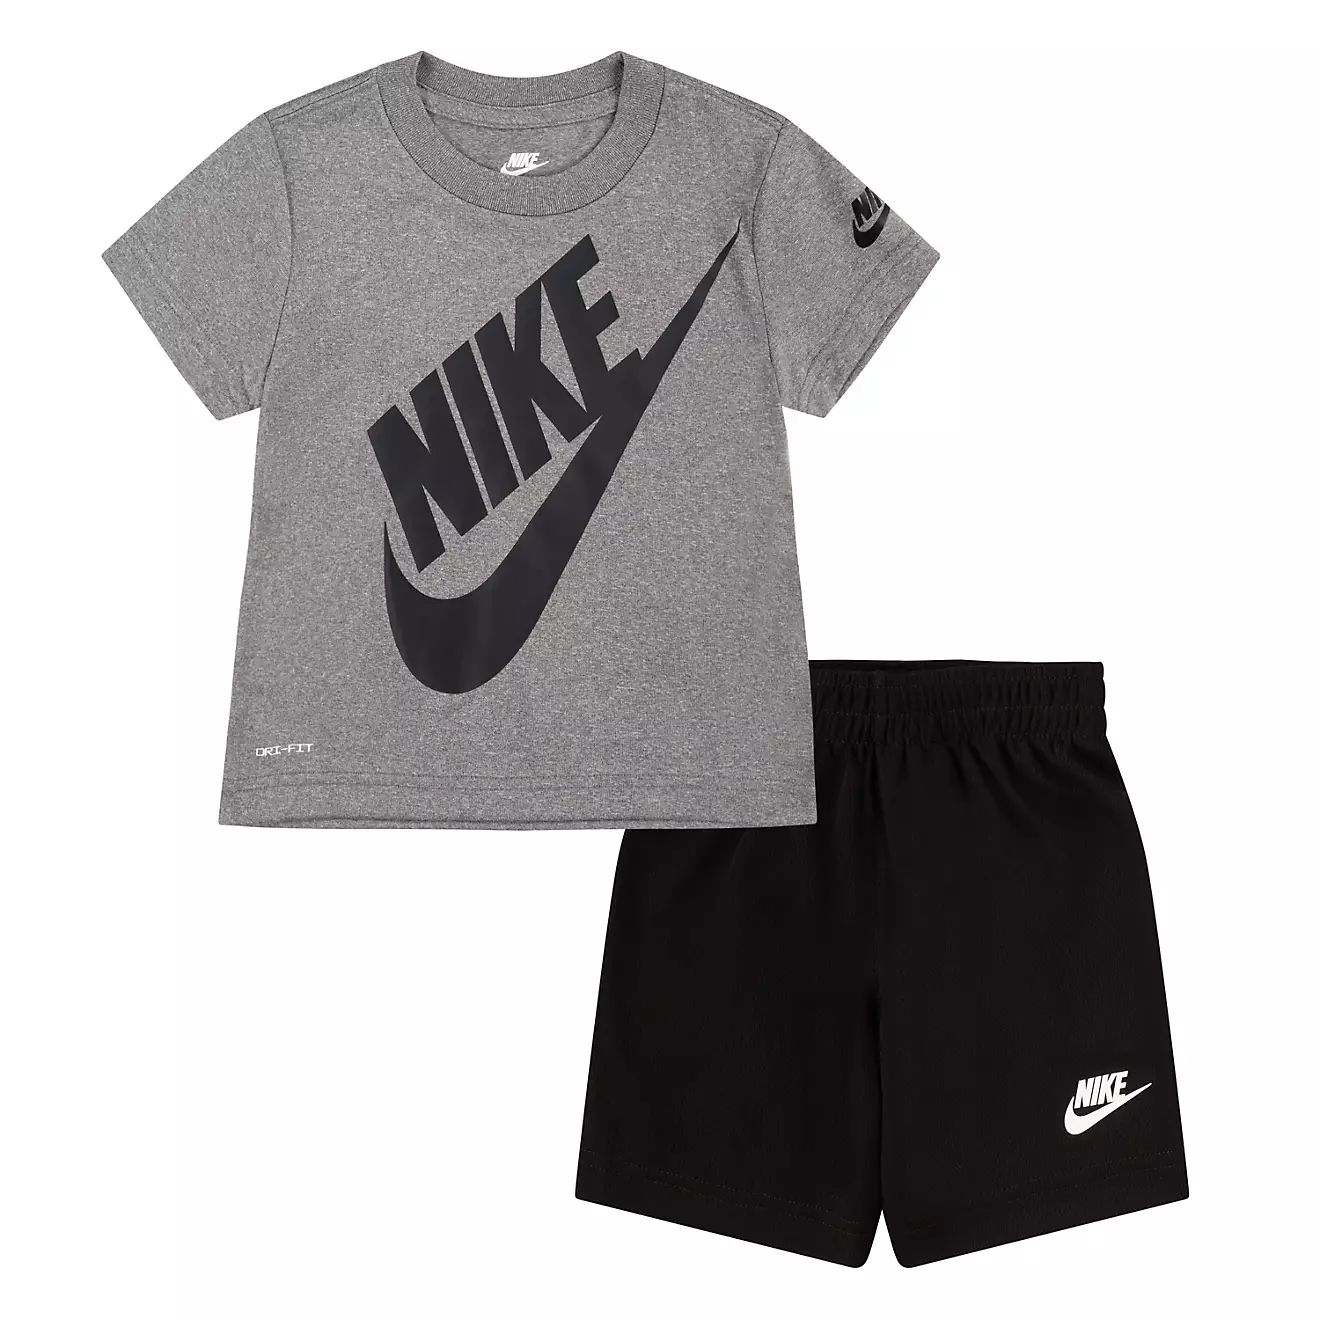 Nike Toddler Boys’ Dri-FIT Futura T-shirt and Shorts Set | Academy Sports + Outdoors